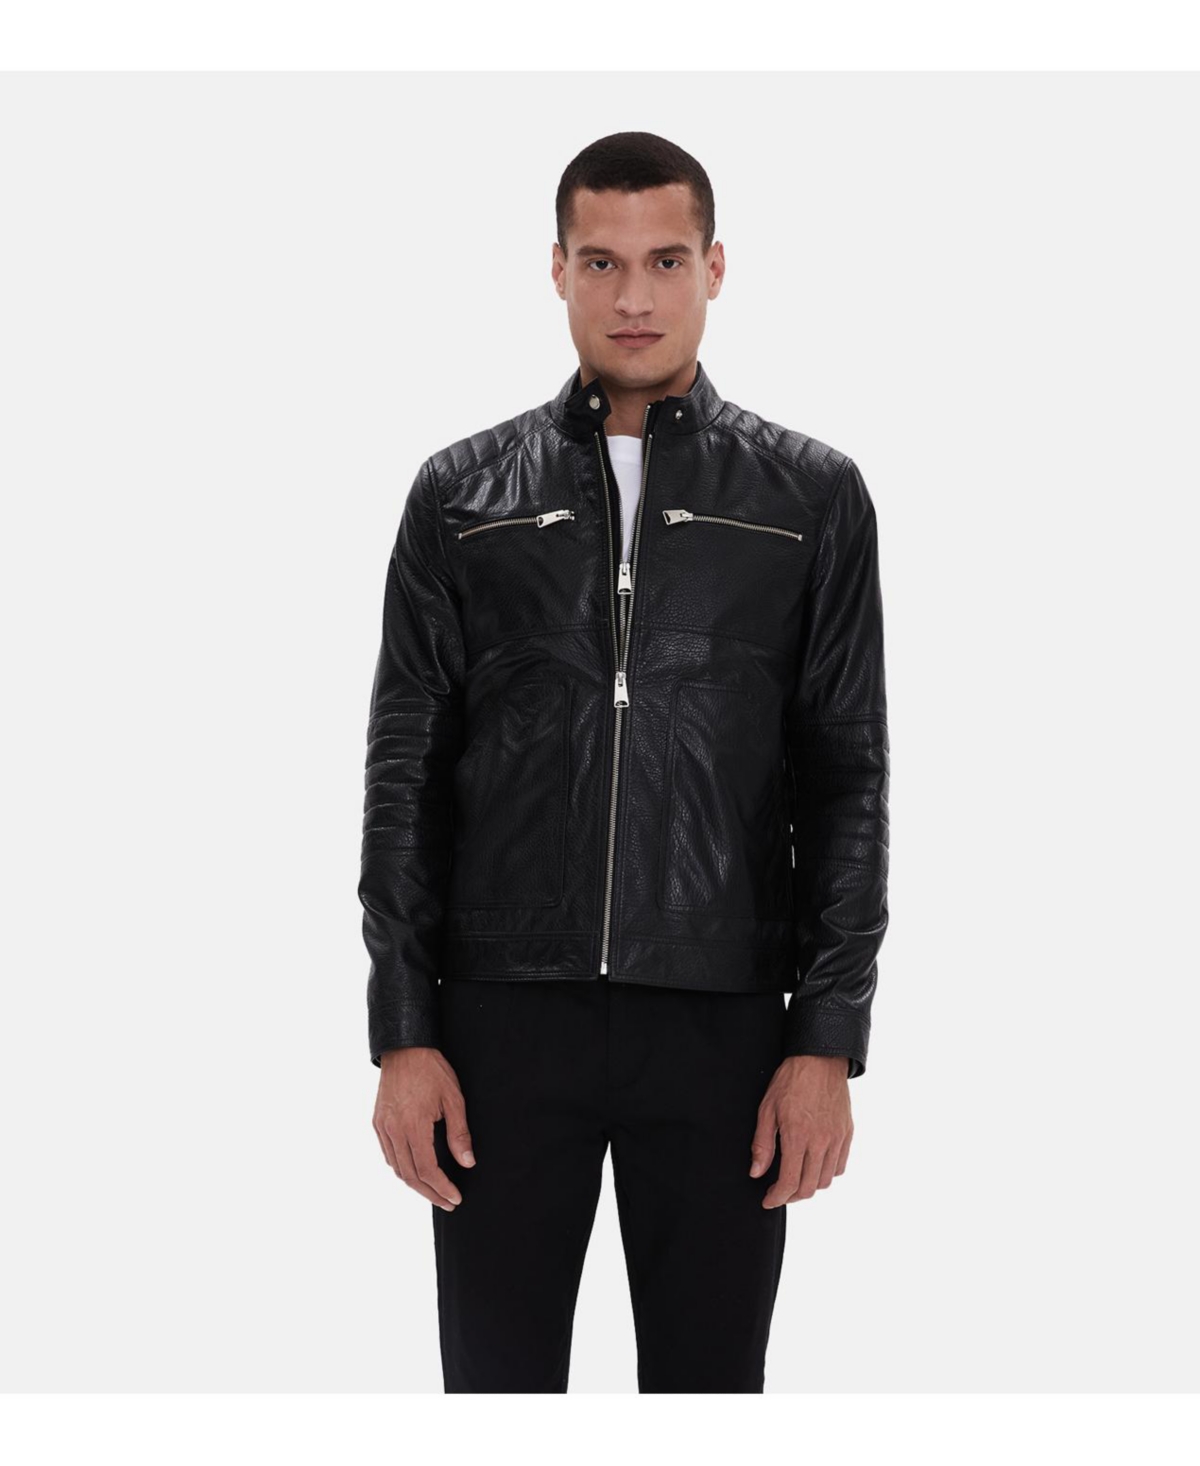 Men's Black Leather Jacket, Cracked - Black